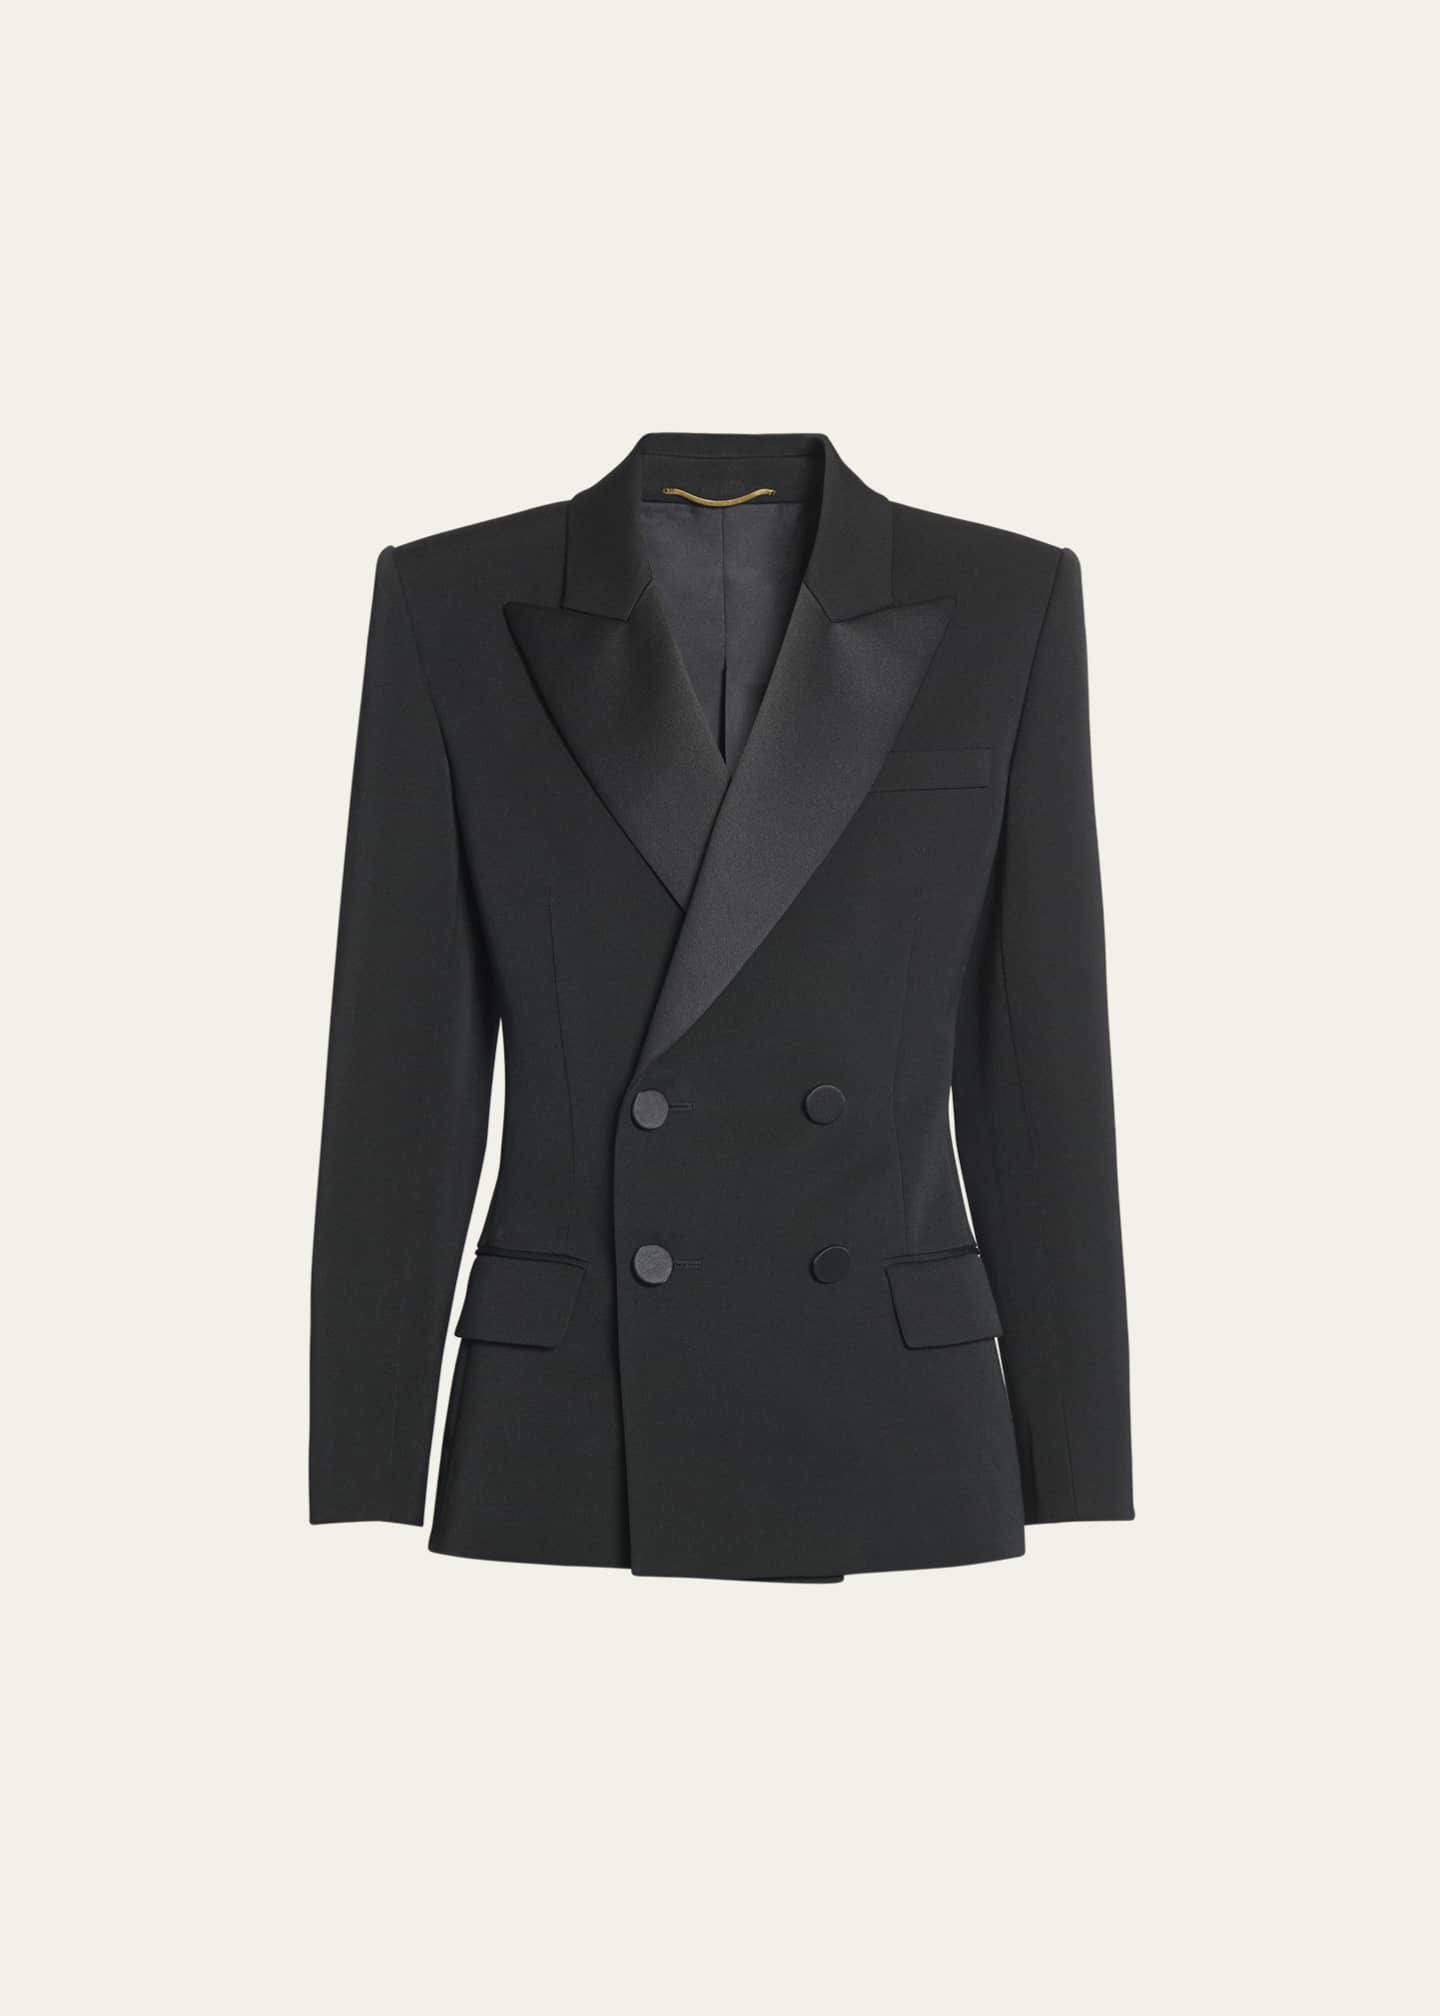 Saint Laurent Fitted Tuxedo Blazer Jacket - Bergdorf Goodman